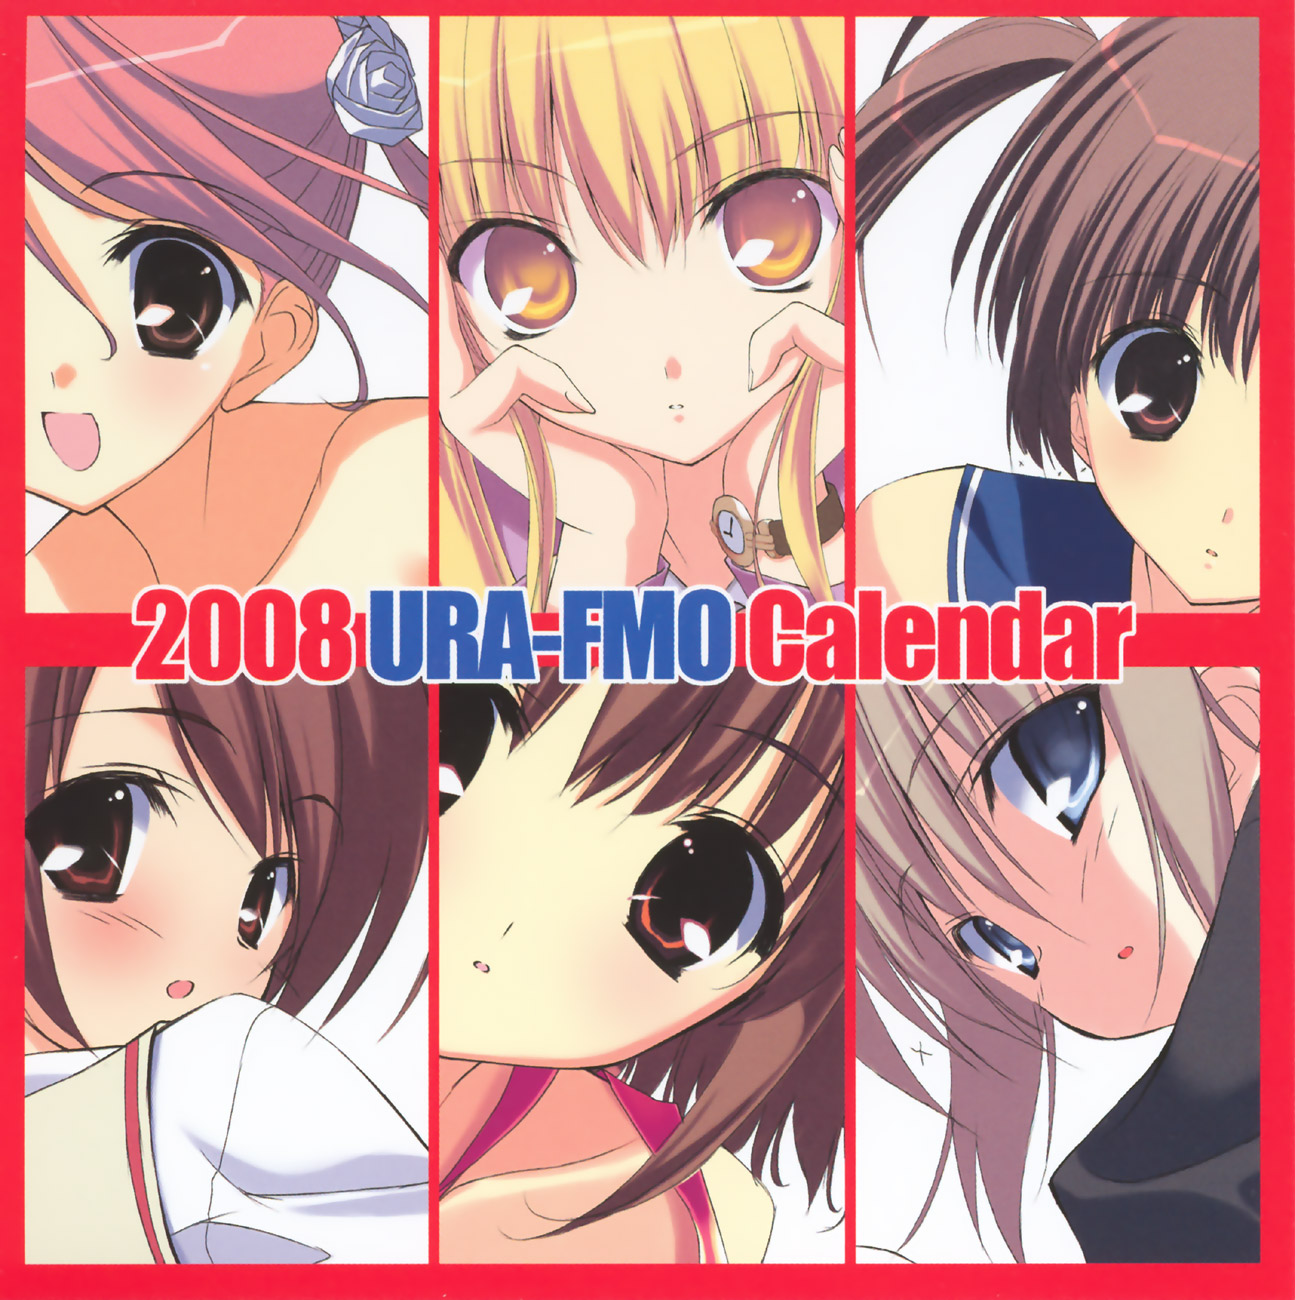 URA-FMO's 2008 Calendar image by URA-FMO